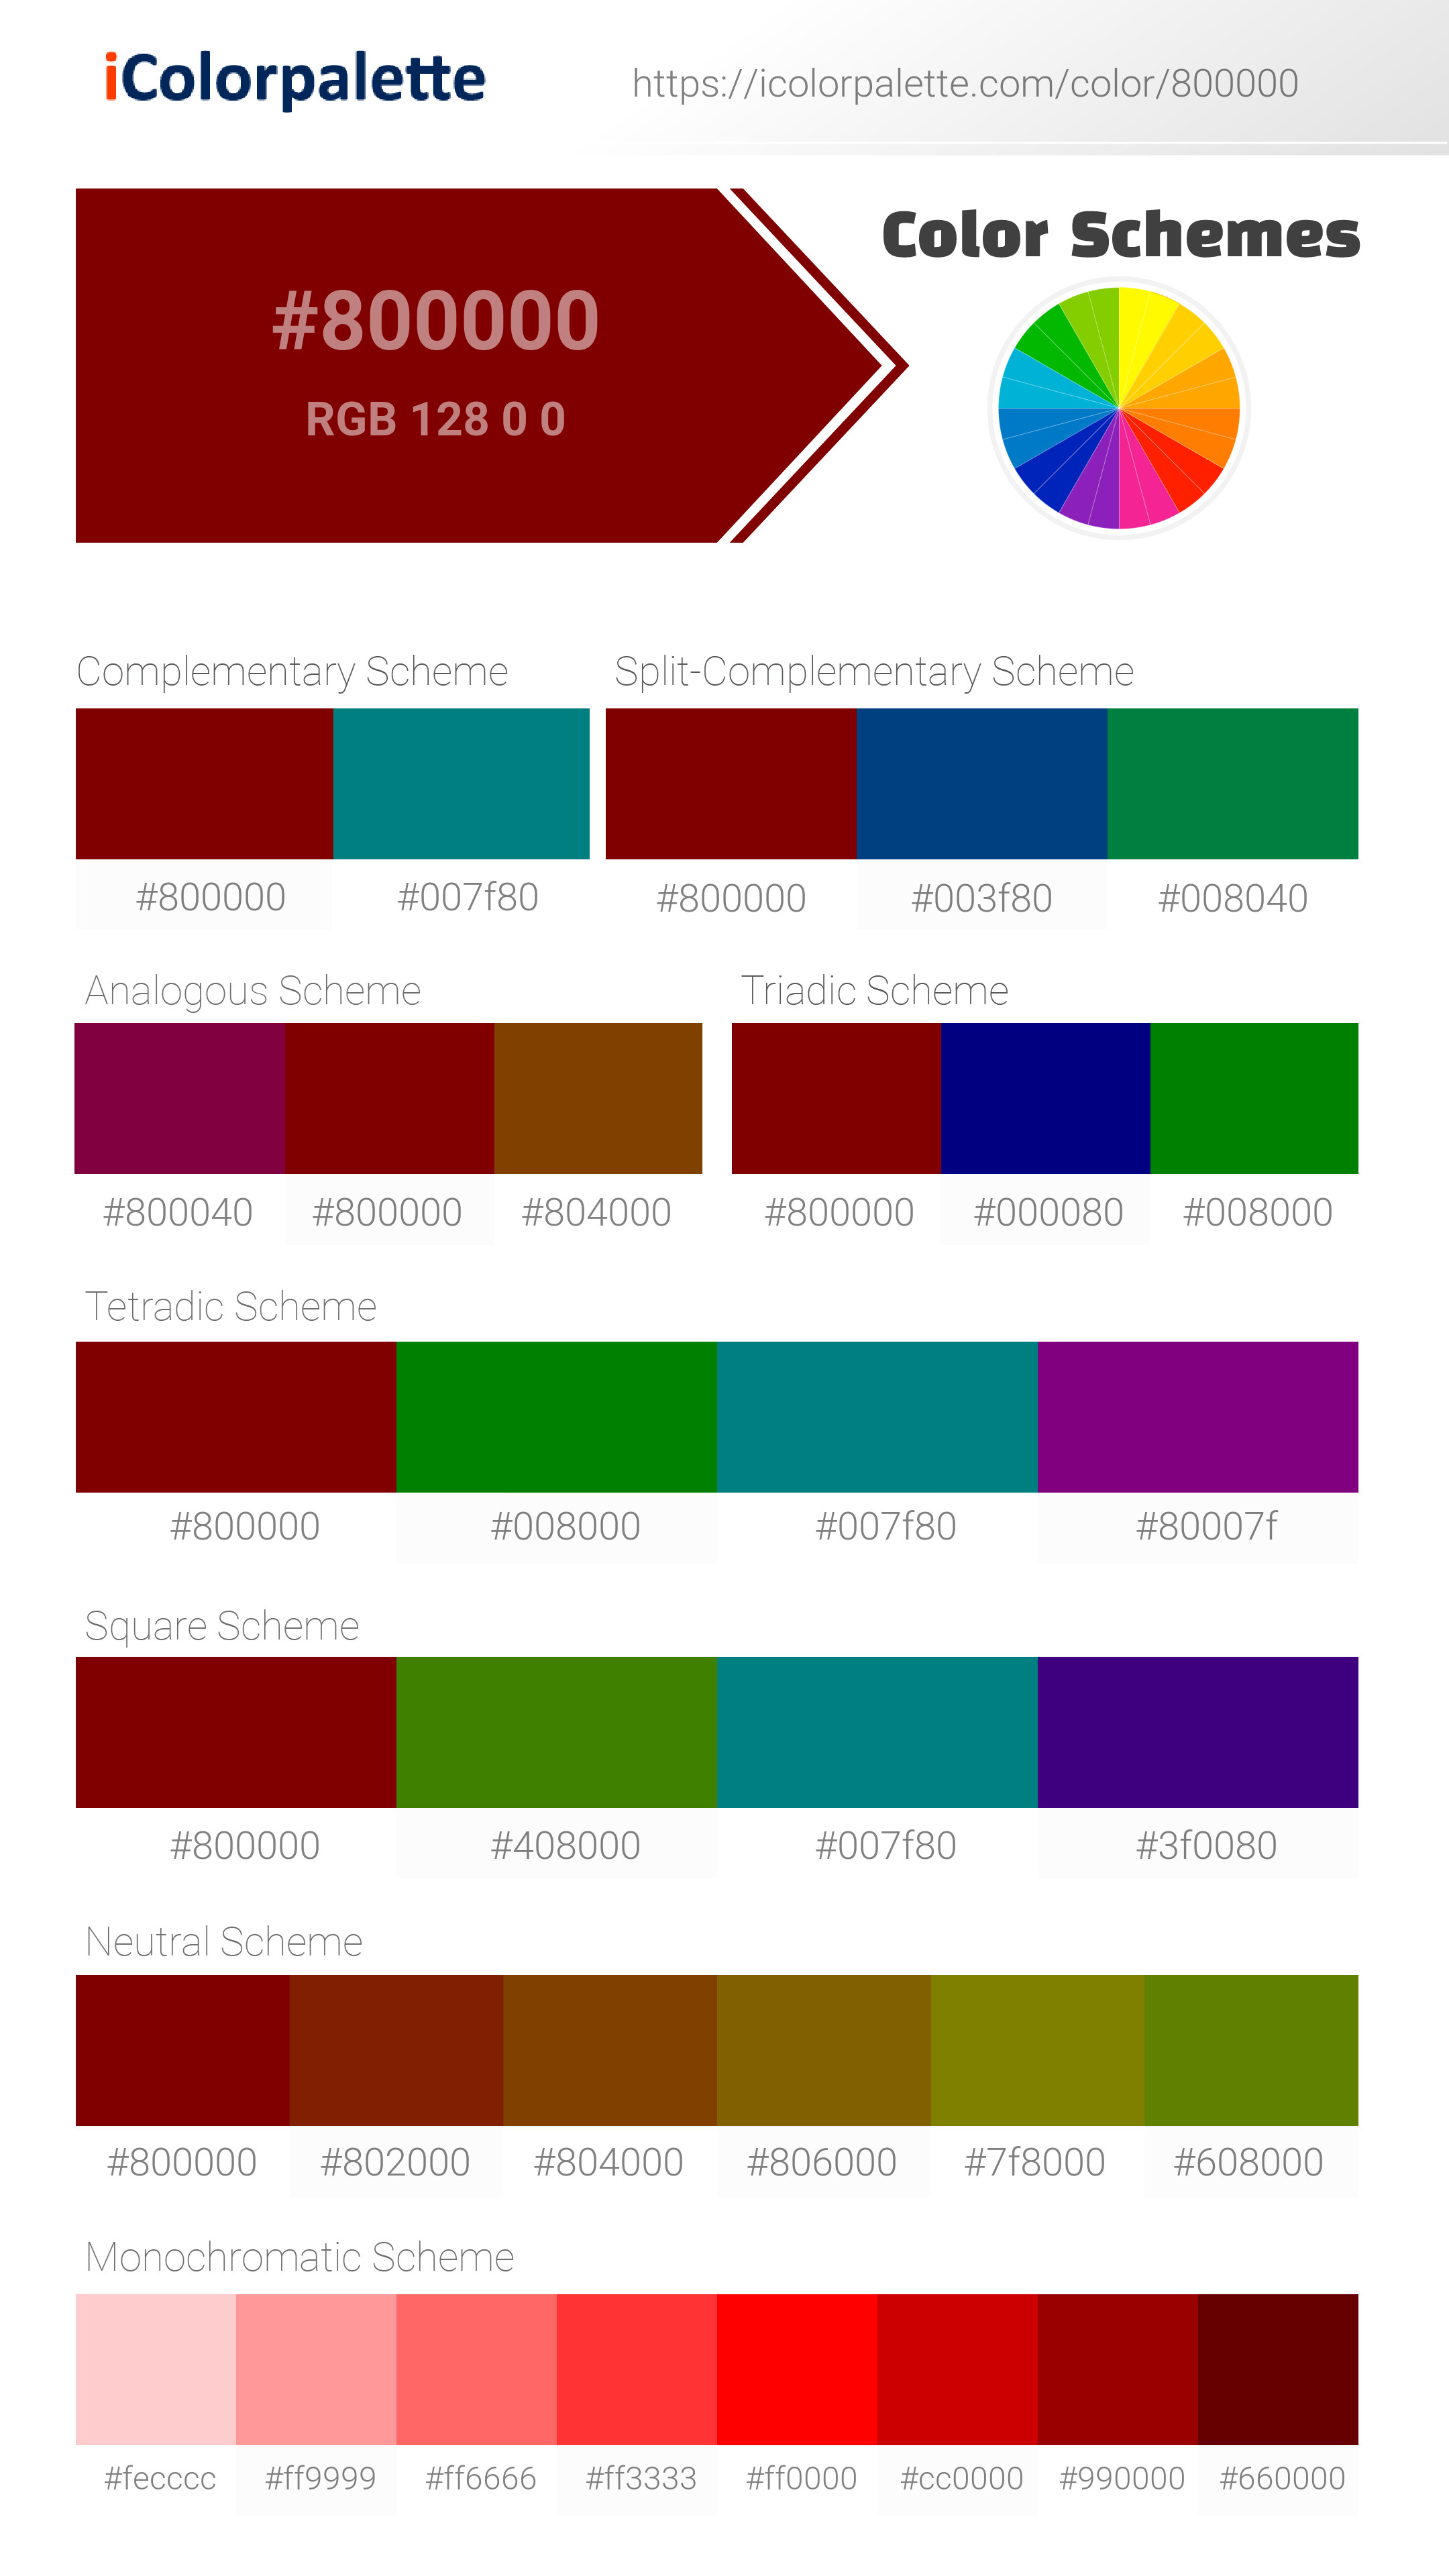 https://www.icolorpalette.com/download/schemes/800000_colorschemes_icolorpalette.jpg